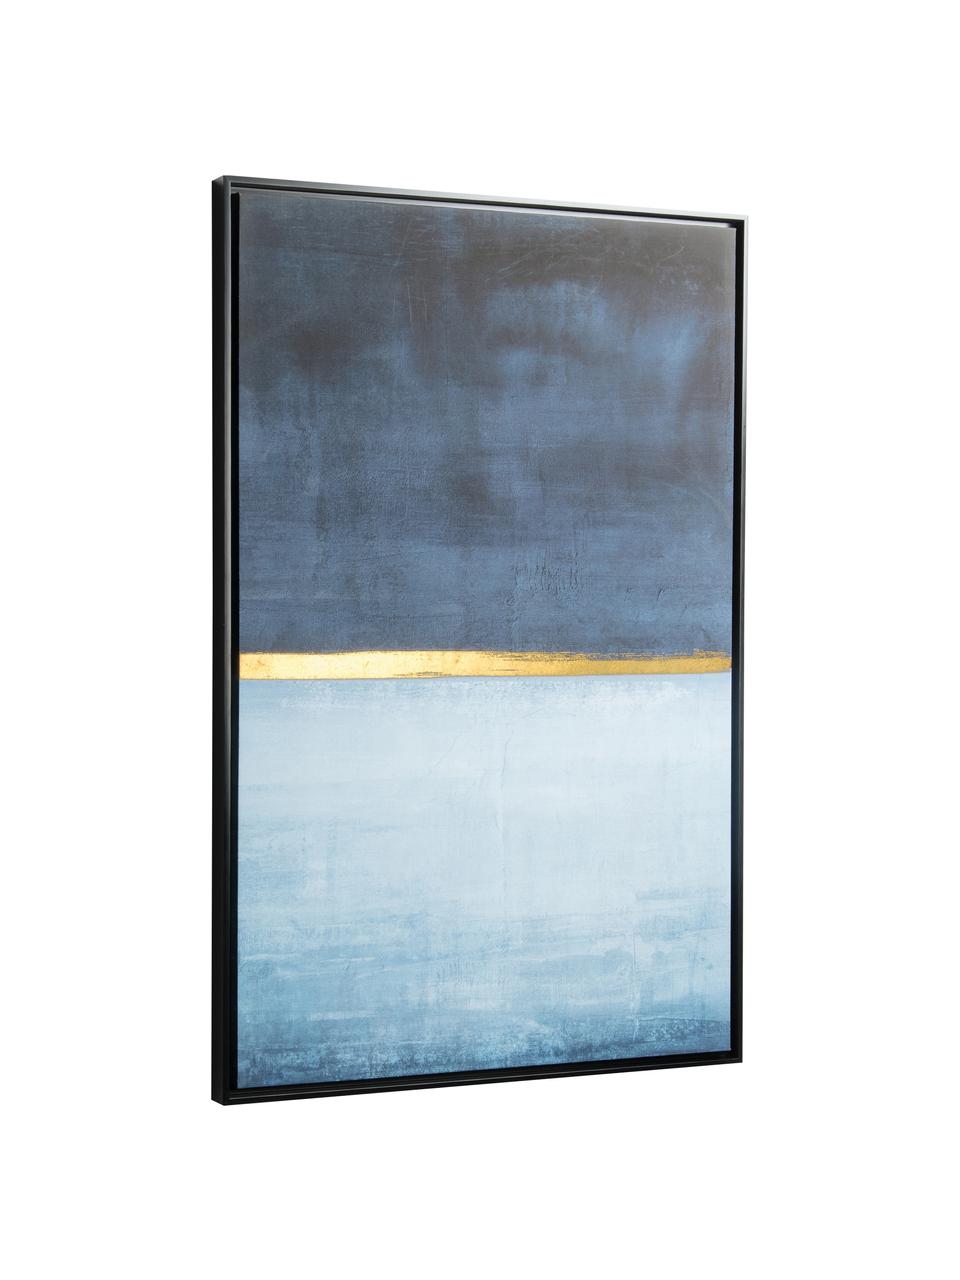 Leinwanddruck Wrigley, Rahmen: Mitteldichte Holzfaserpla, Bild: Leinwand, Blautöne, Goldfarben, B 60 x H 90 cm